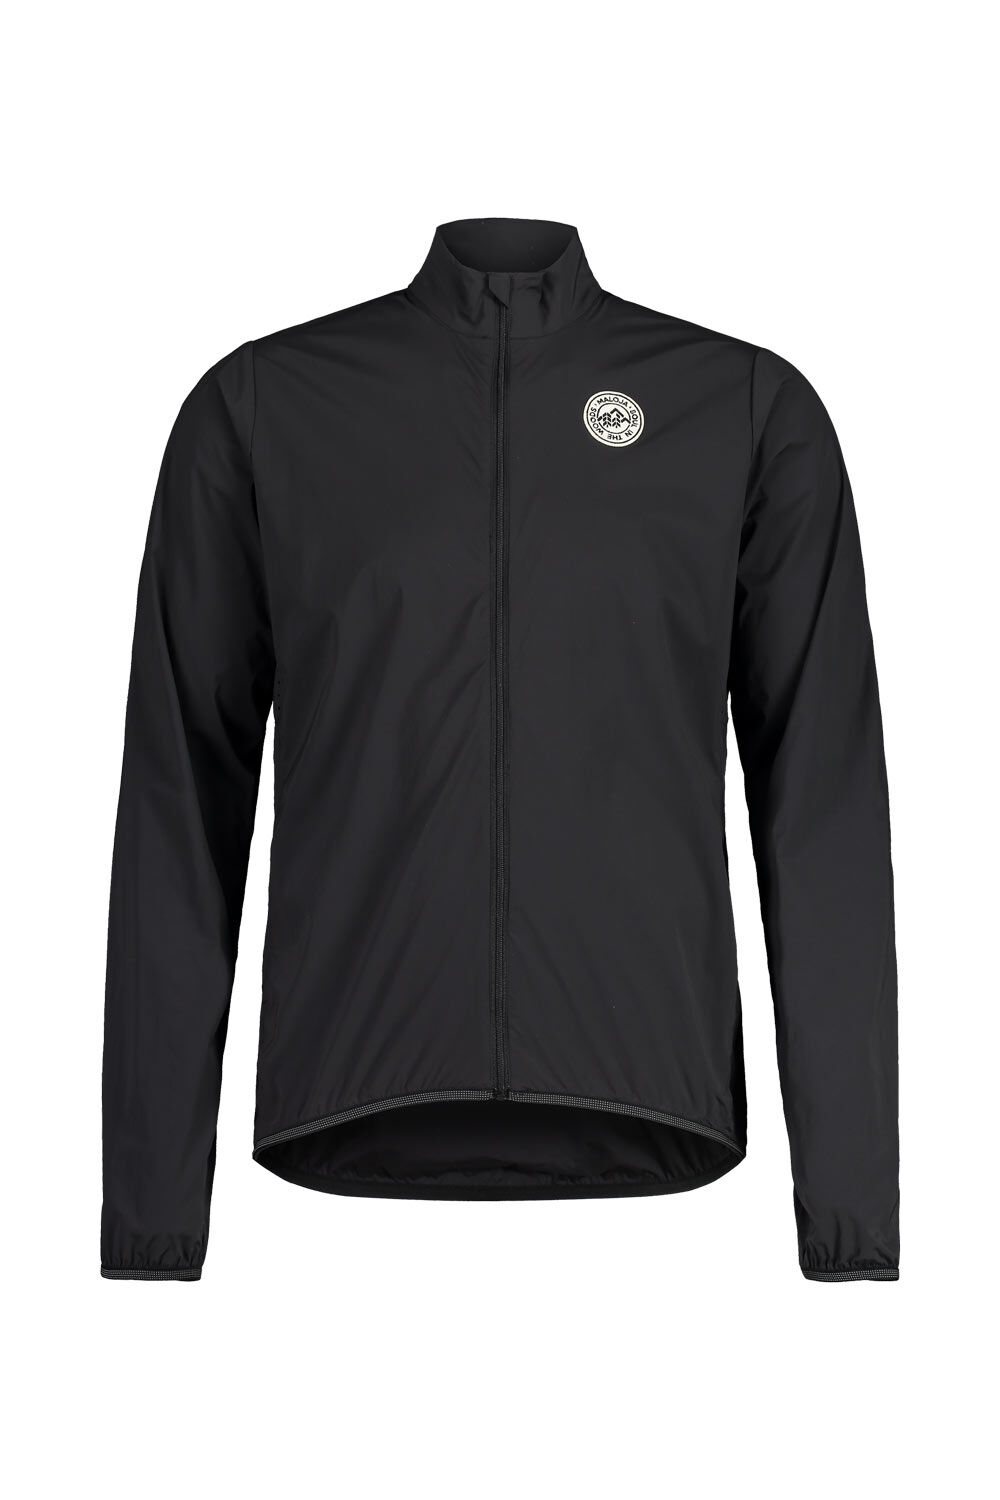 Maloja MaxM. Jacket - Cycling jacket - Men's